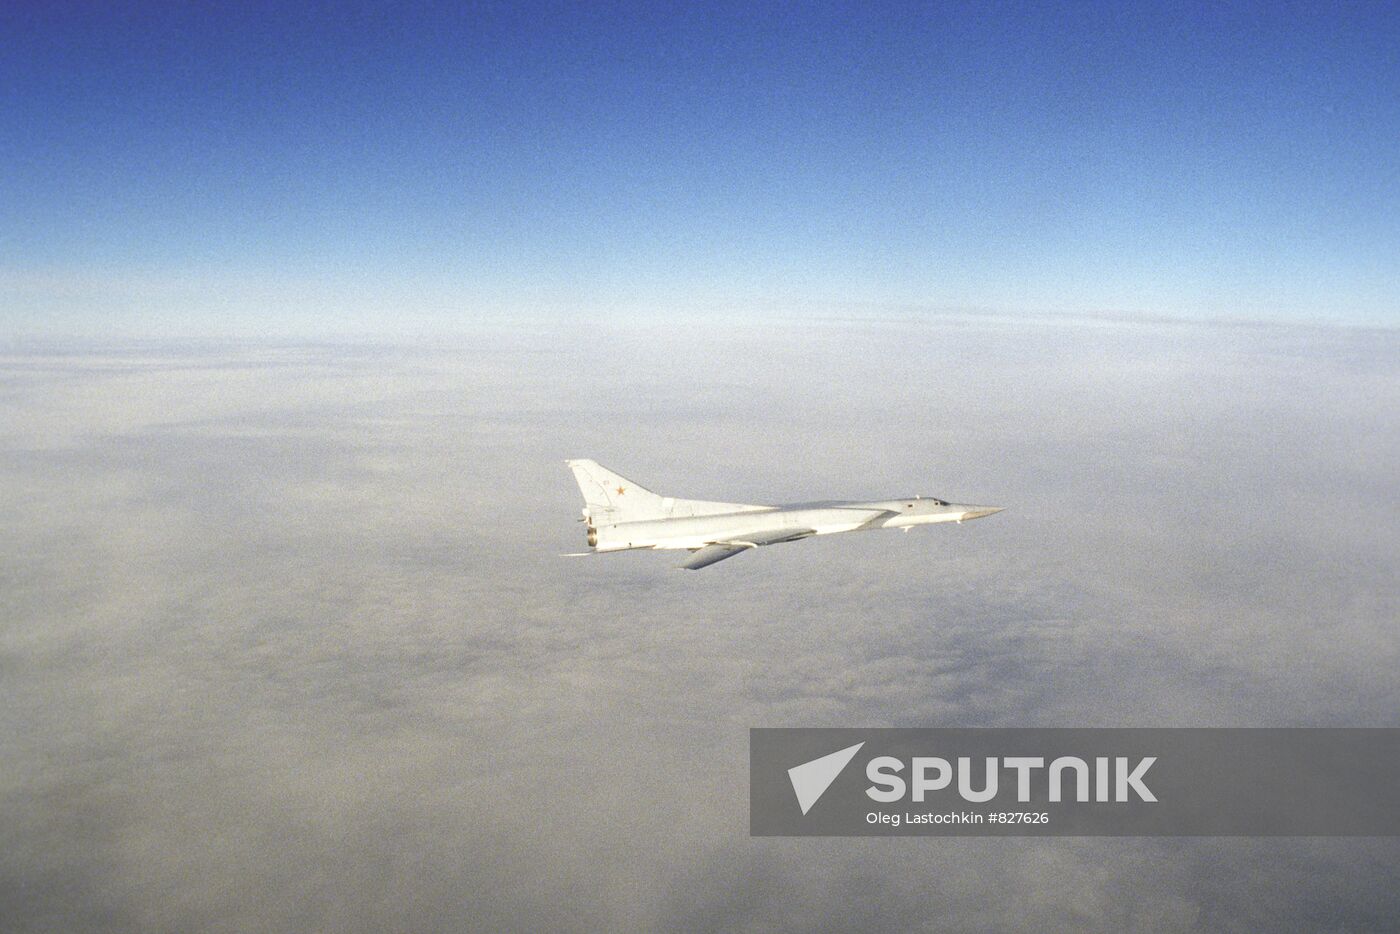 A Tupolev Tu-22-M-3 supersonic bomber